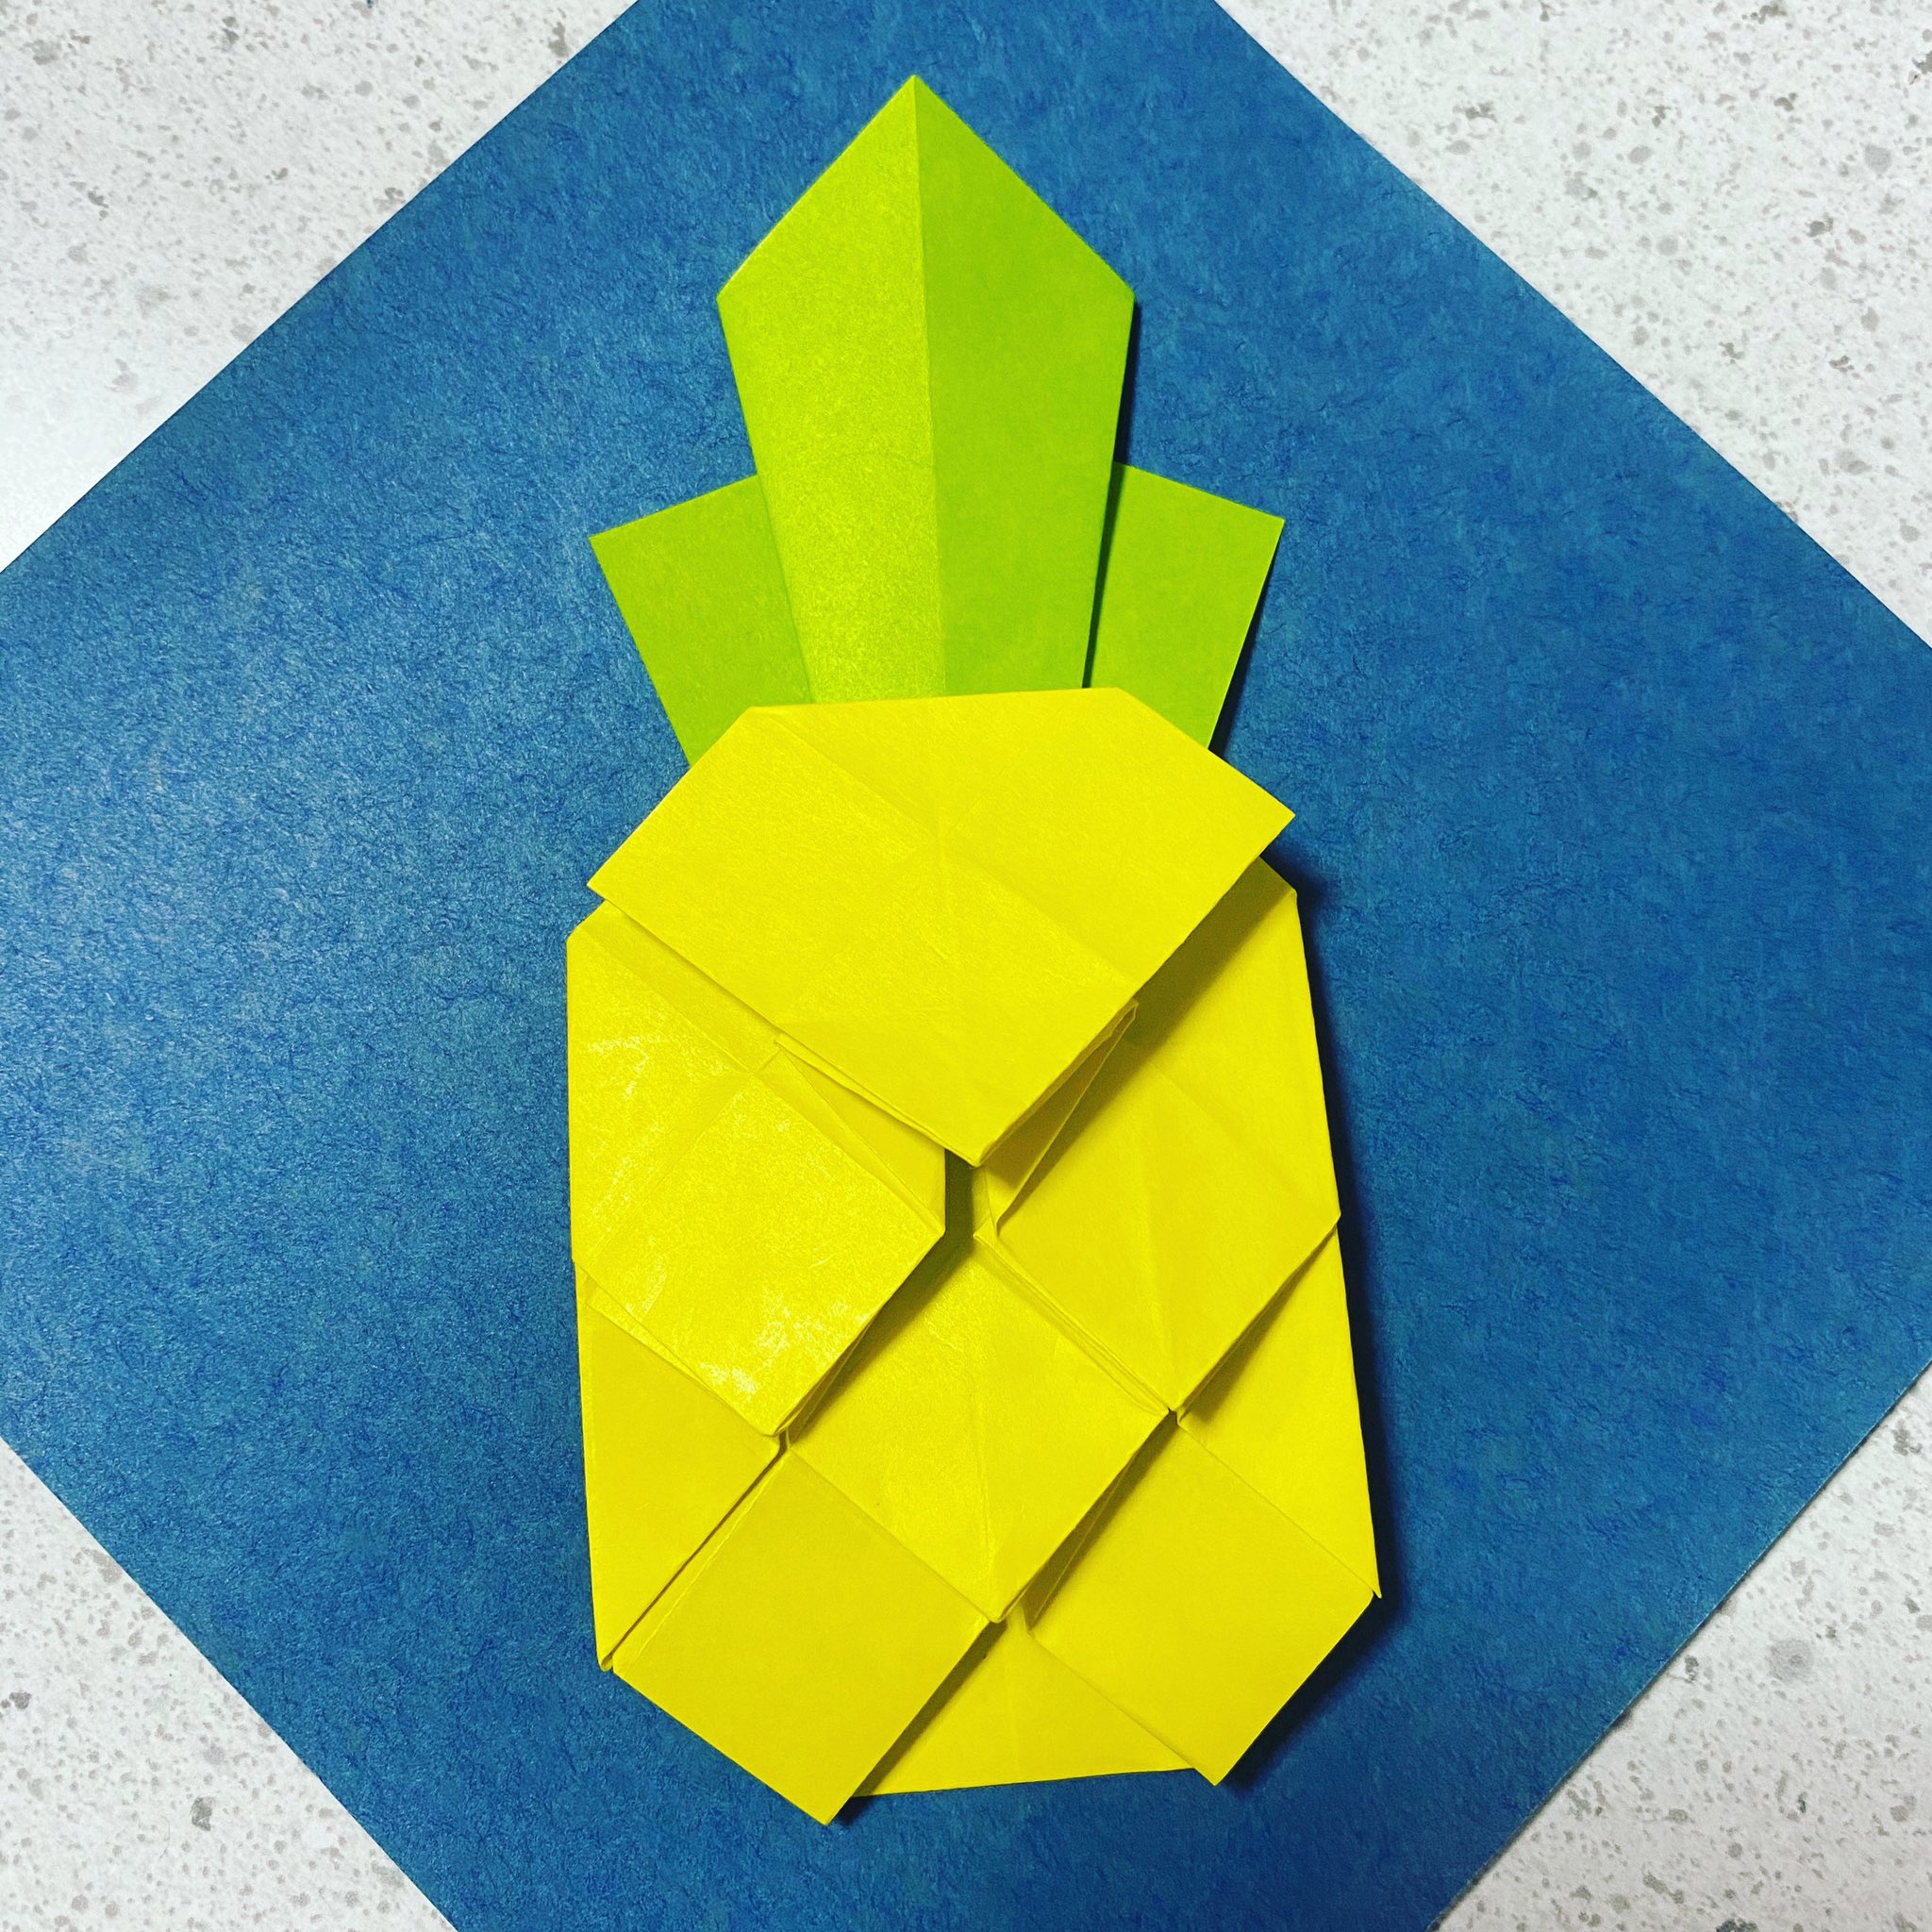 Yoko Pa Twitter 240 367 Pineapple Designed By Me パイナップル 拙作 8月はパイン消費拡大月間なんだって 365origamichallenge Origami 折り紙作品 T Co Ypdeobdhzd Twitter